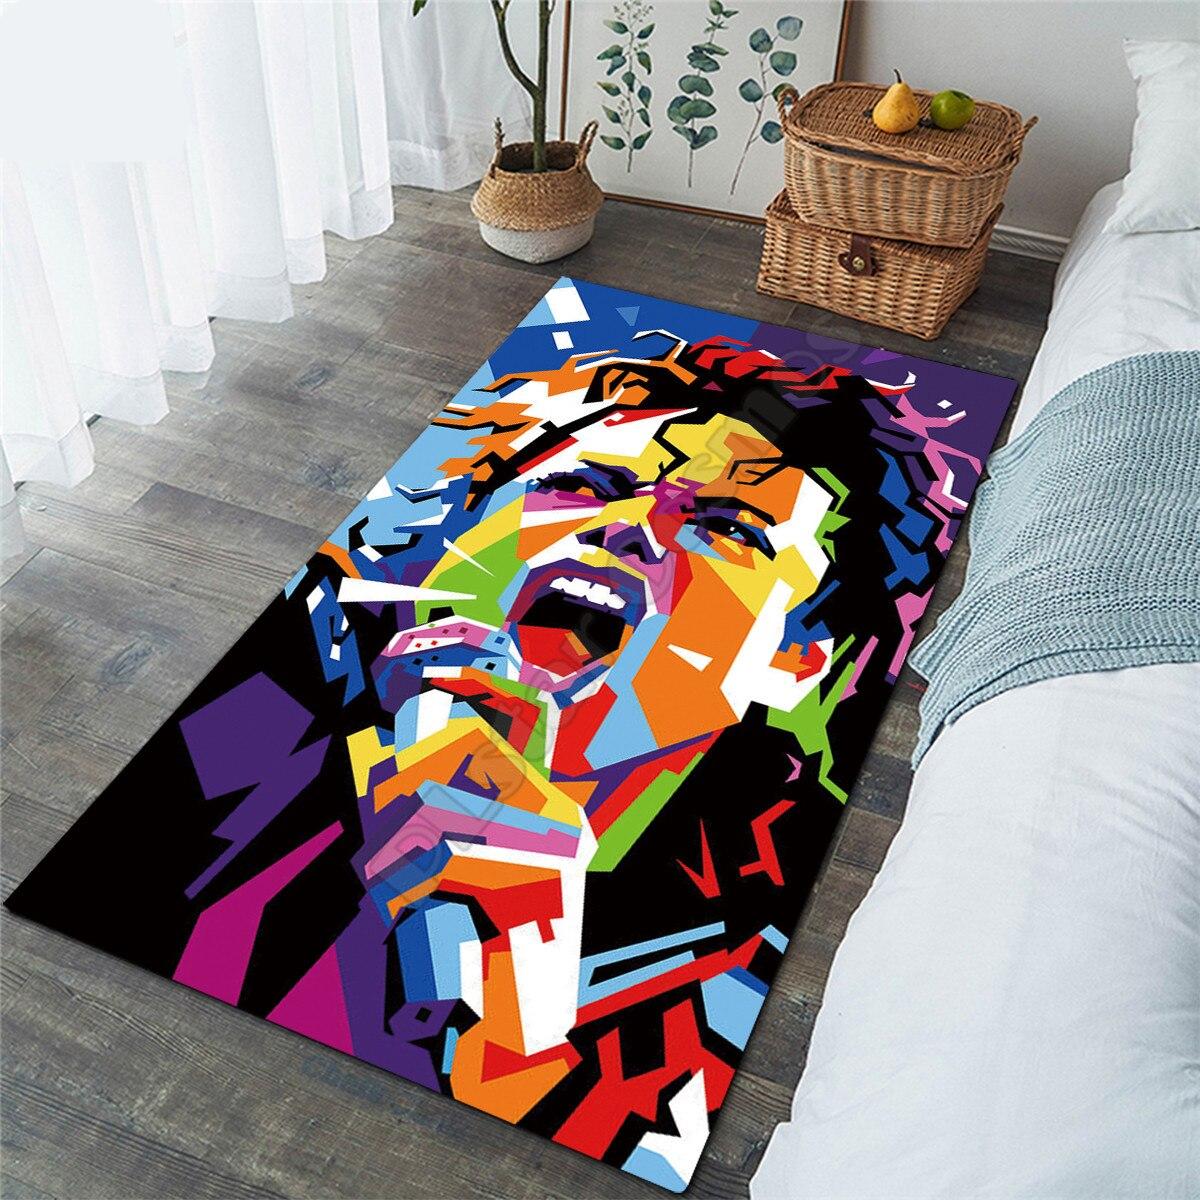 Michael Jackson carpet Square Anti-Skid Bedroom Home Decor cb5feb1b7314637725a2e7: 1|10|11|12|2|3|4|5|6|7|8|9